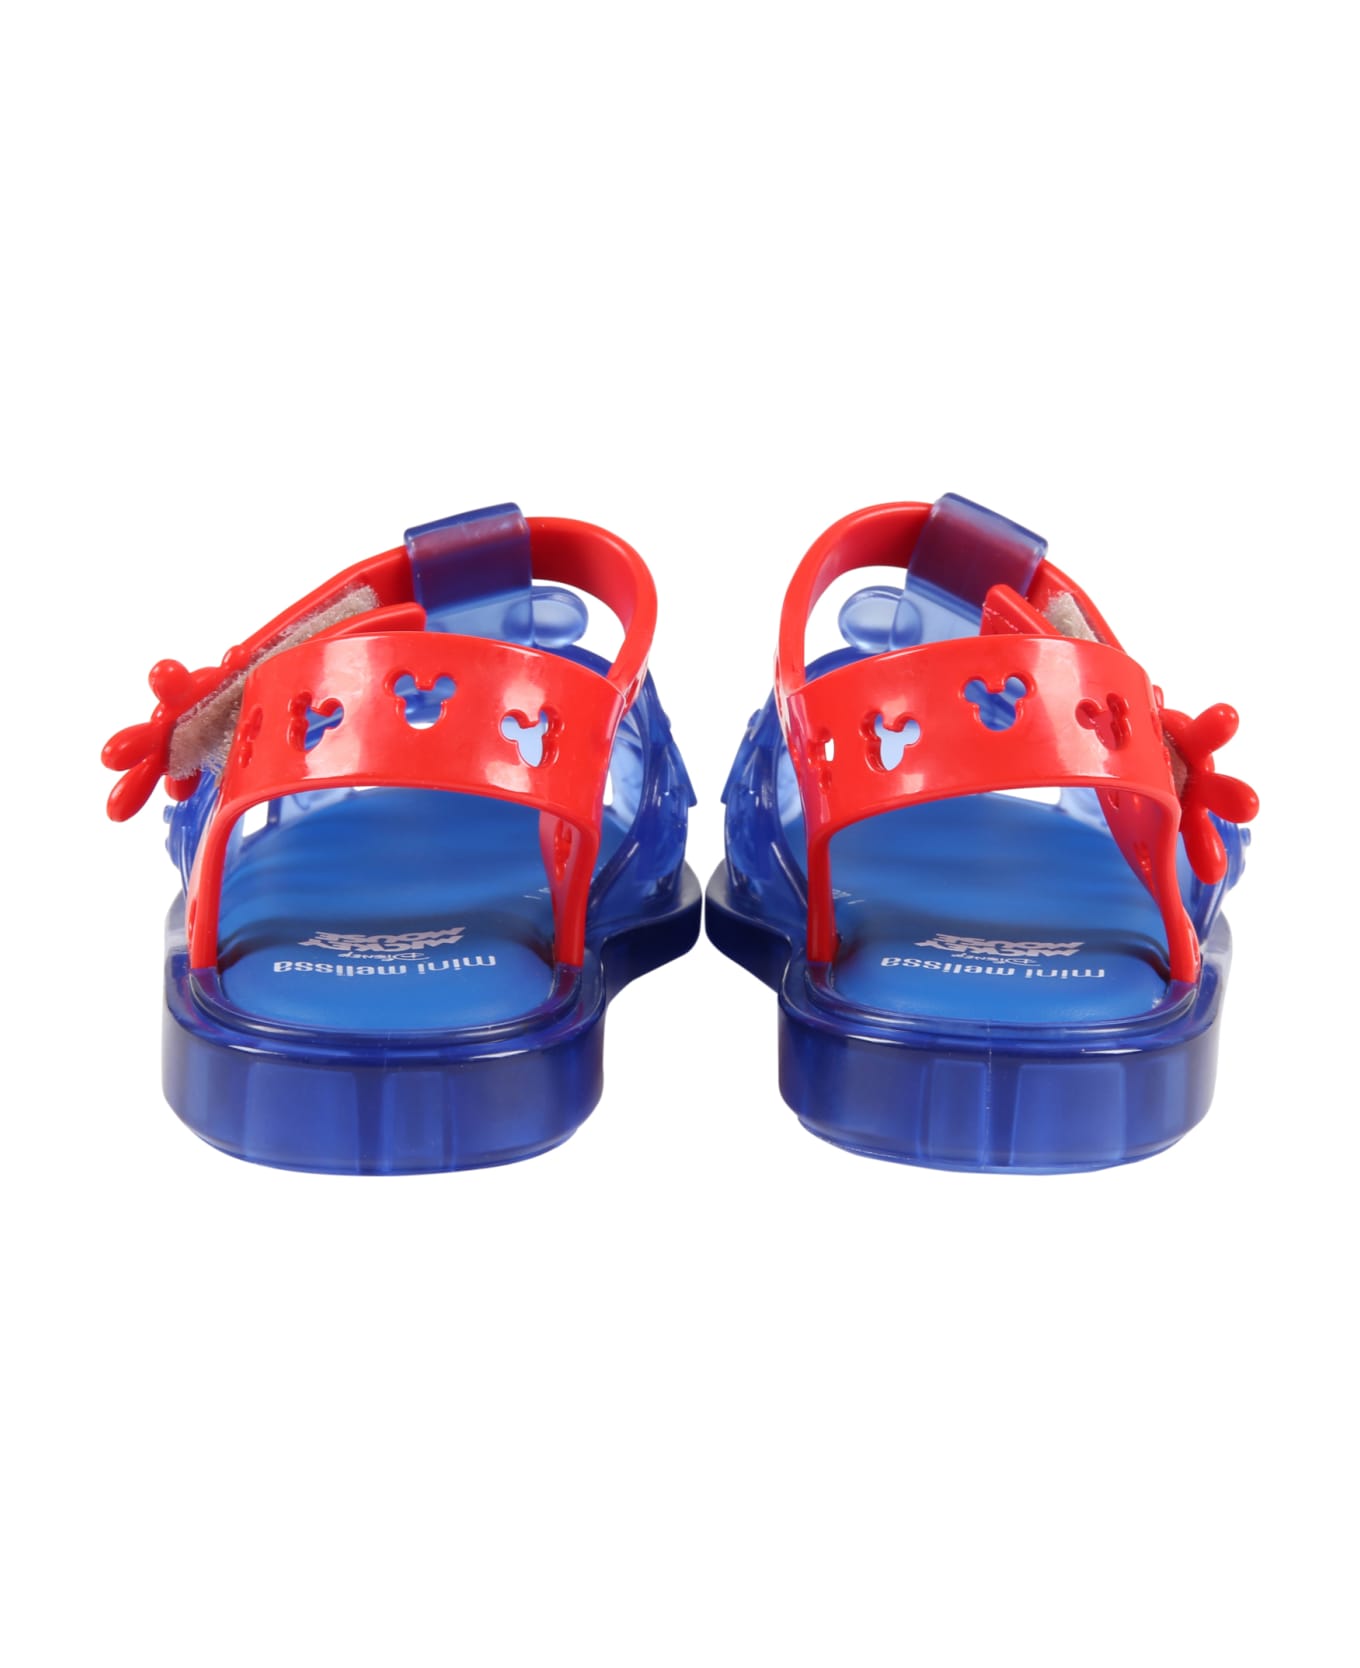 Melissa Multicolor Sandals For Boy - Blue